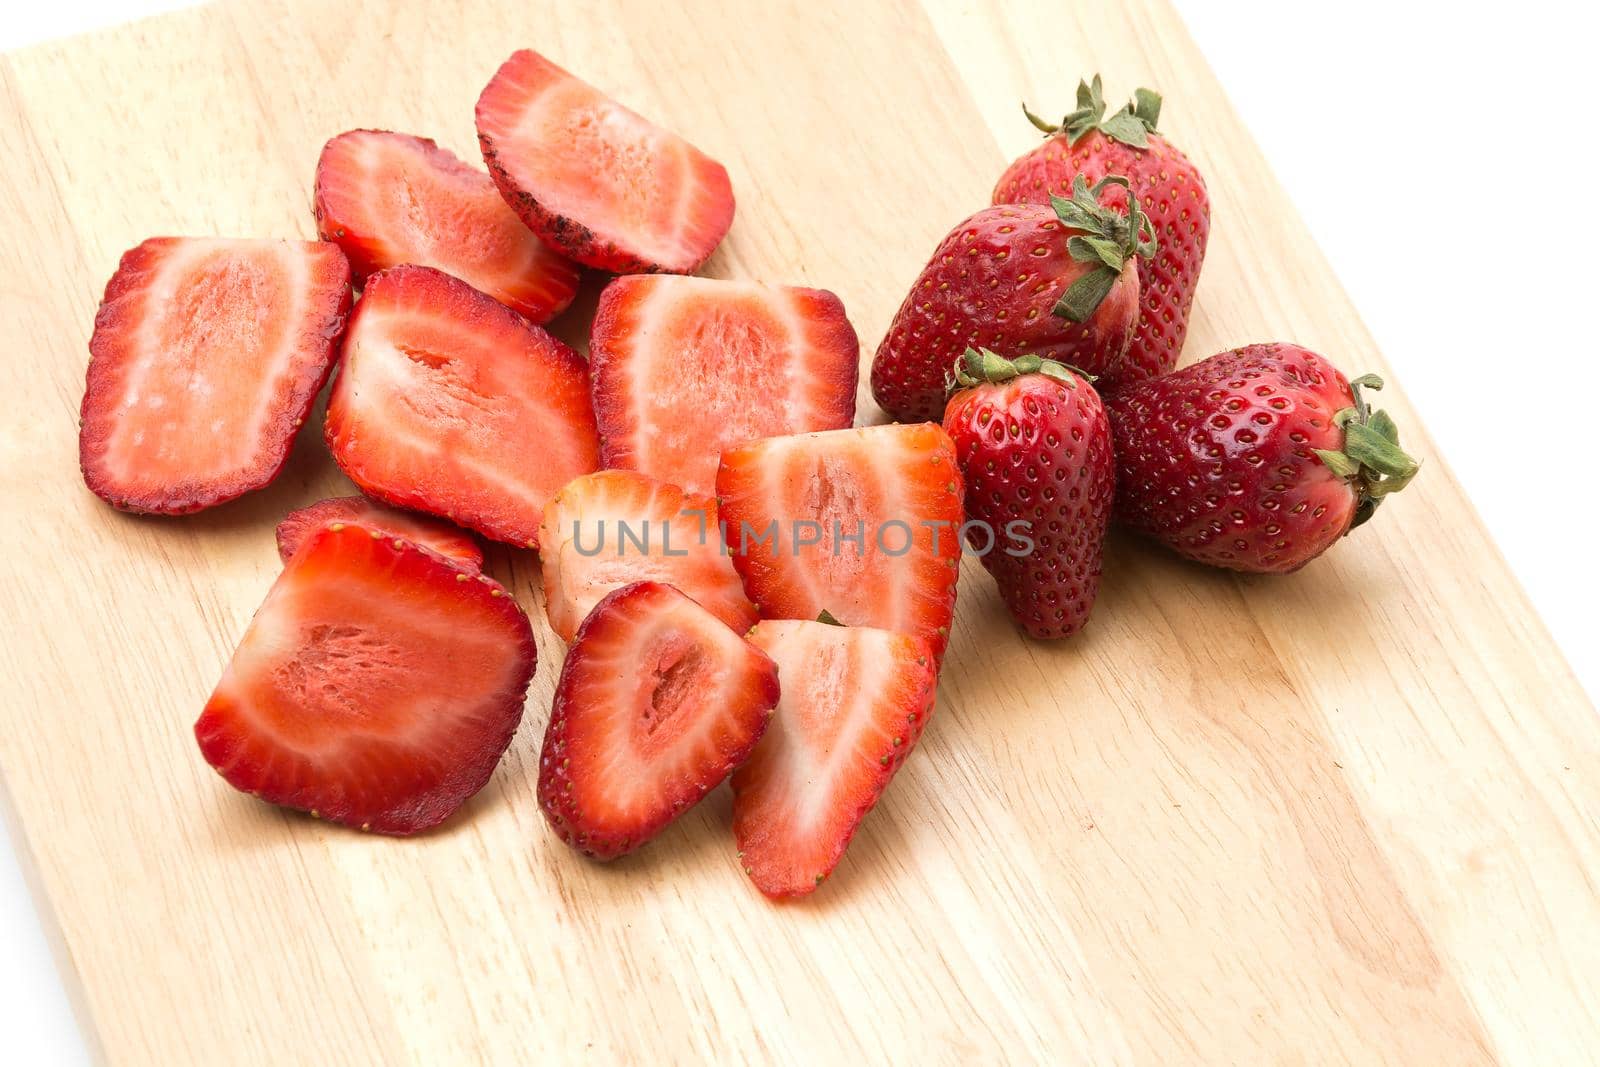 strawberry slice on wood board